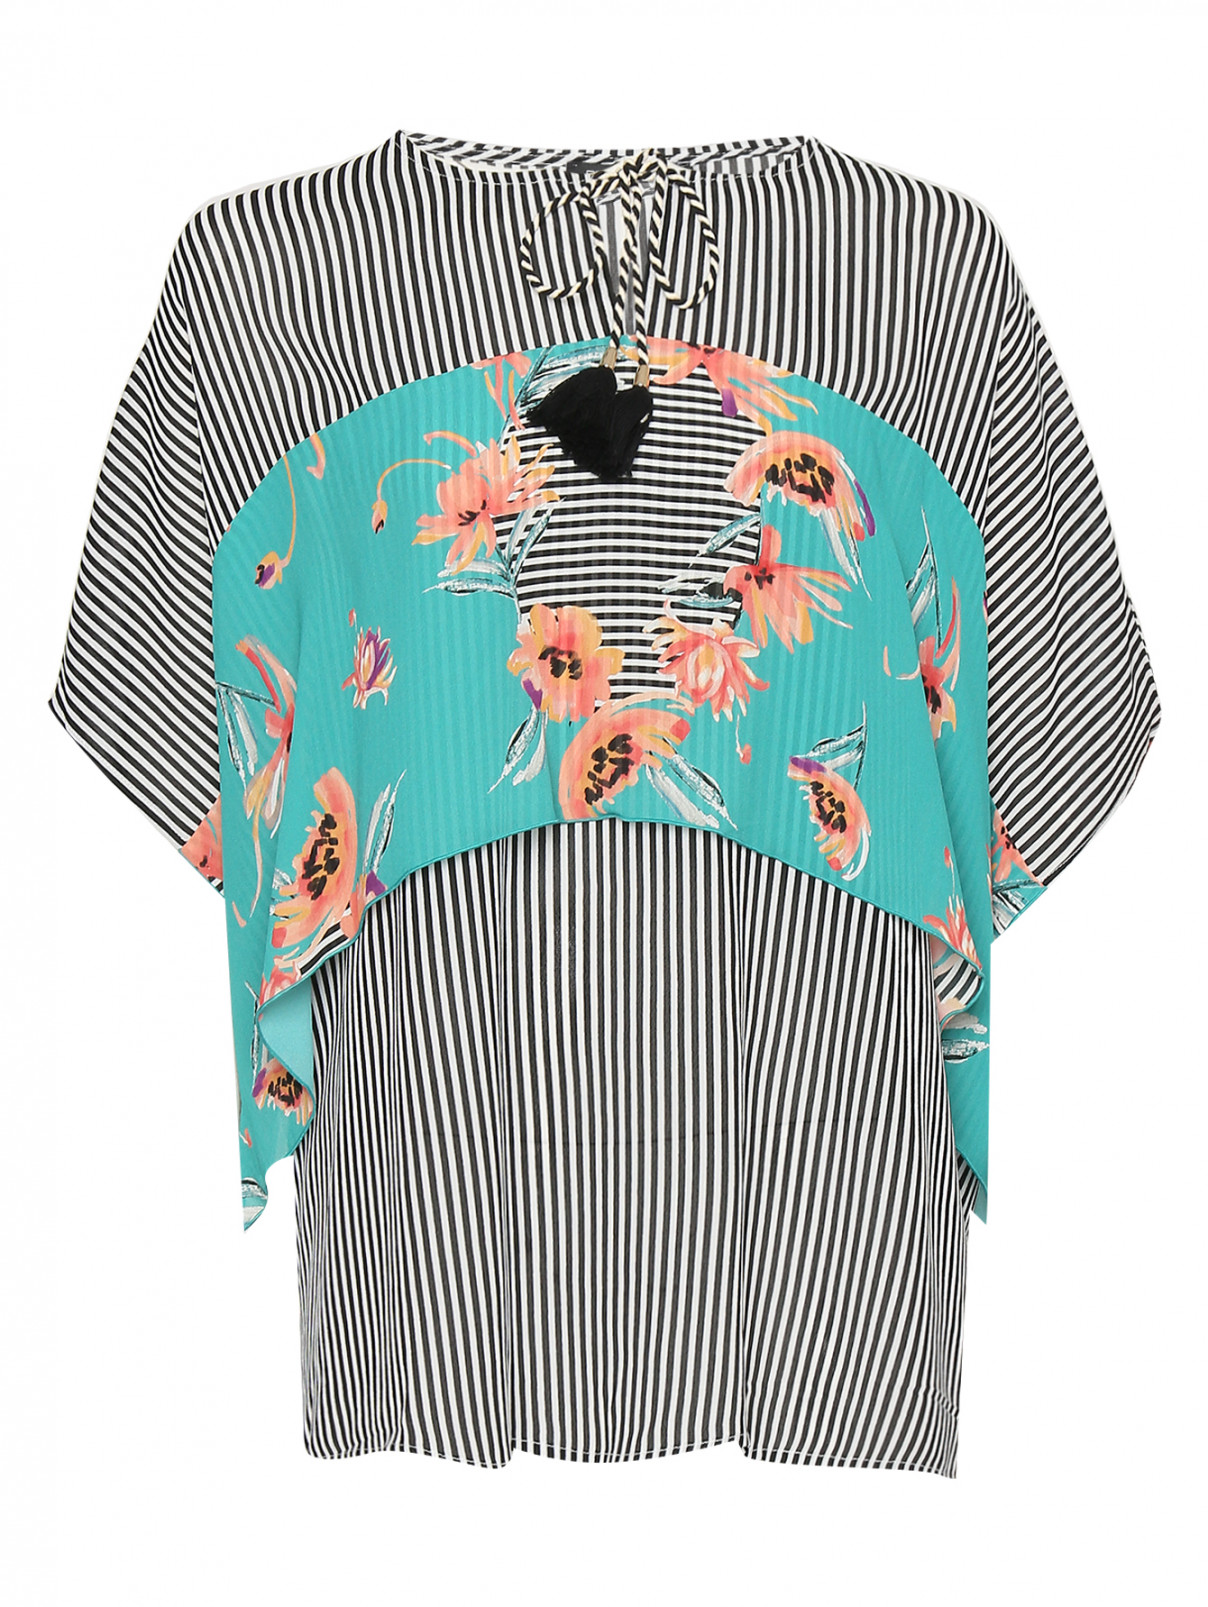 Блуза с короткими рукавами Penny Black  –  Общий вид  – Цвет:  Узор